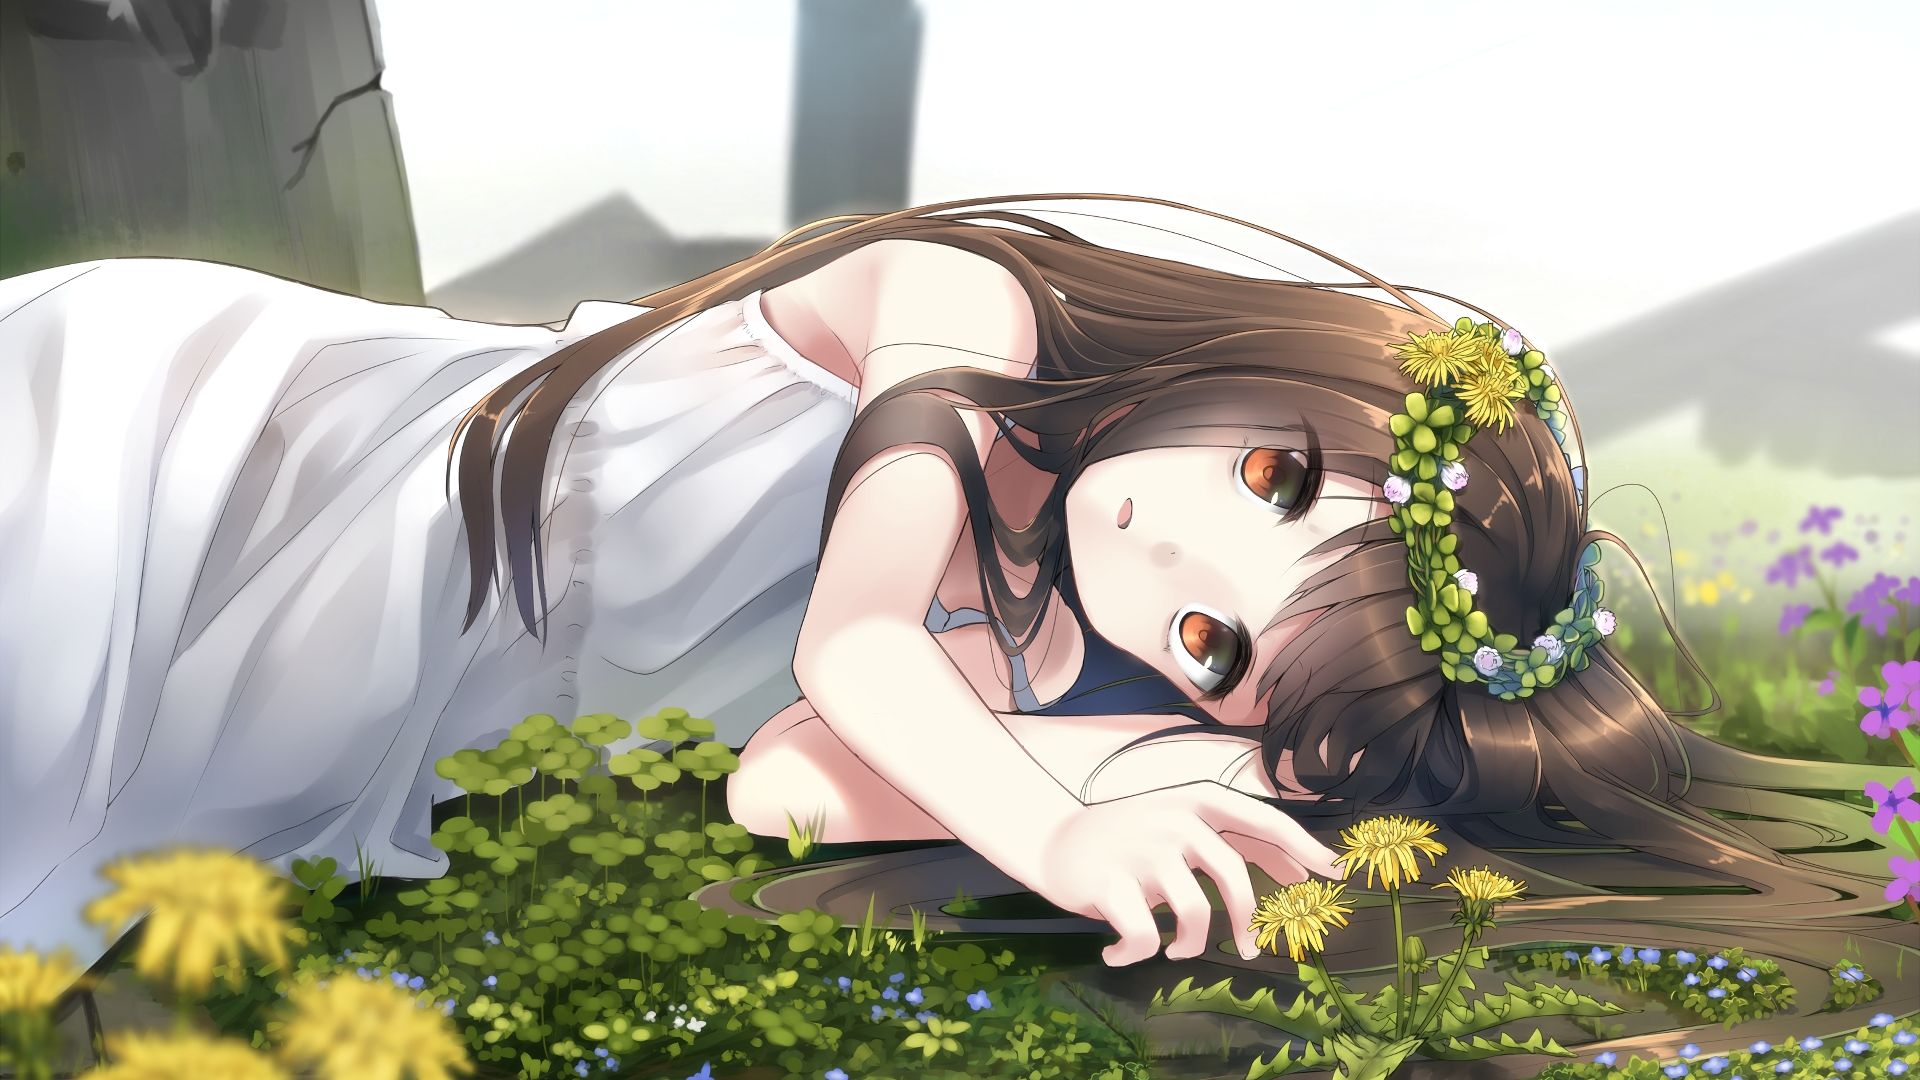 Wallpaper Lying down, cute anime girl, meadow